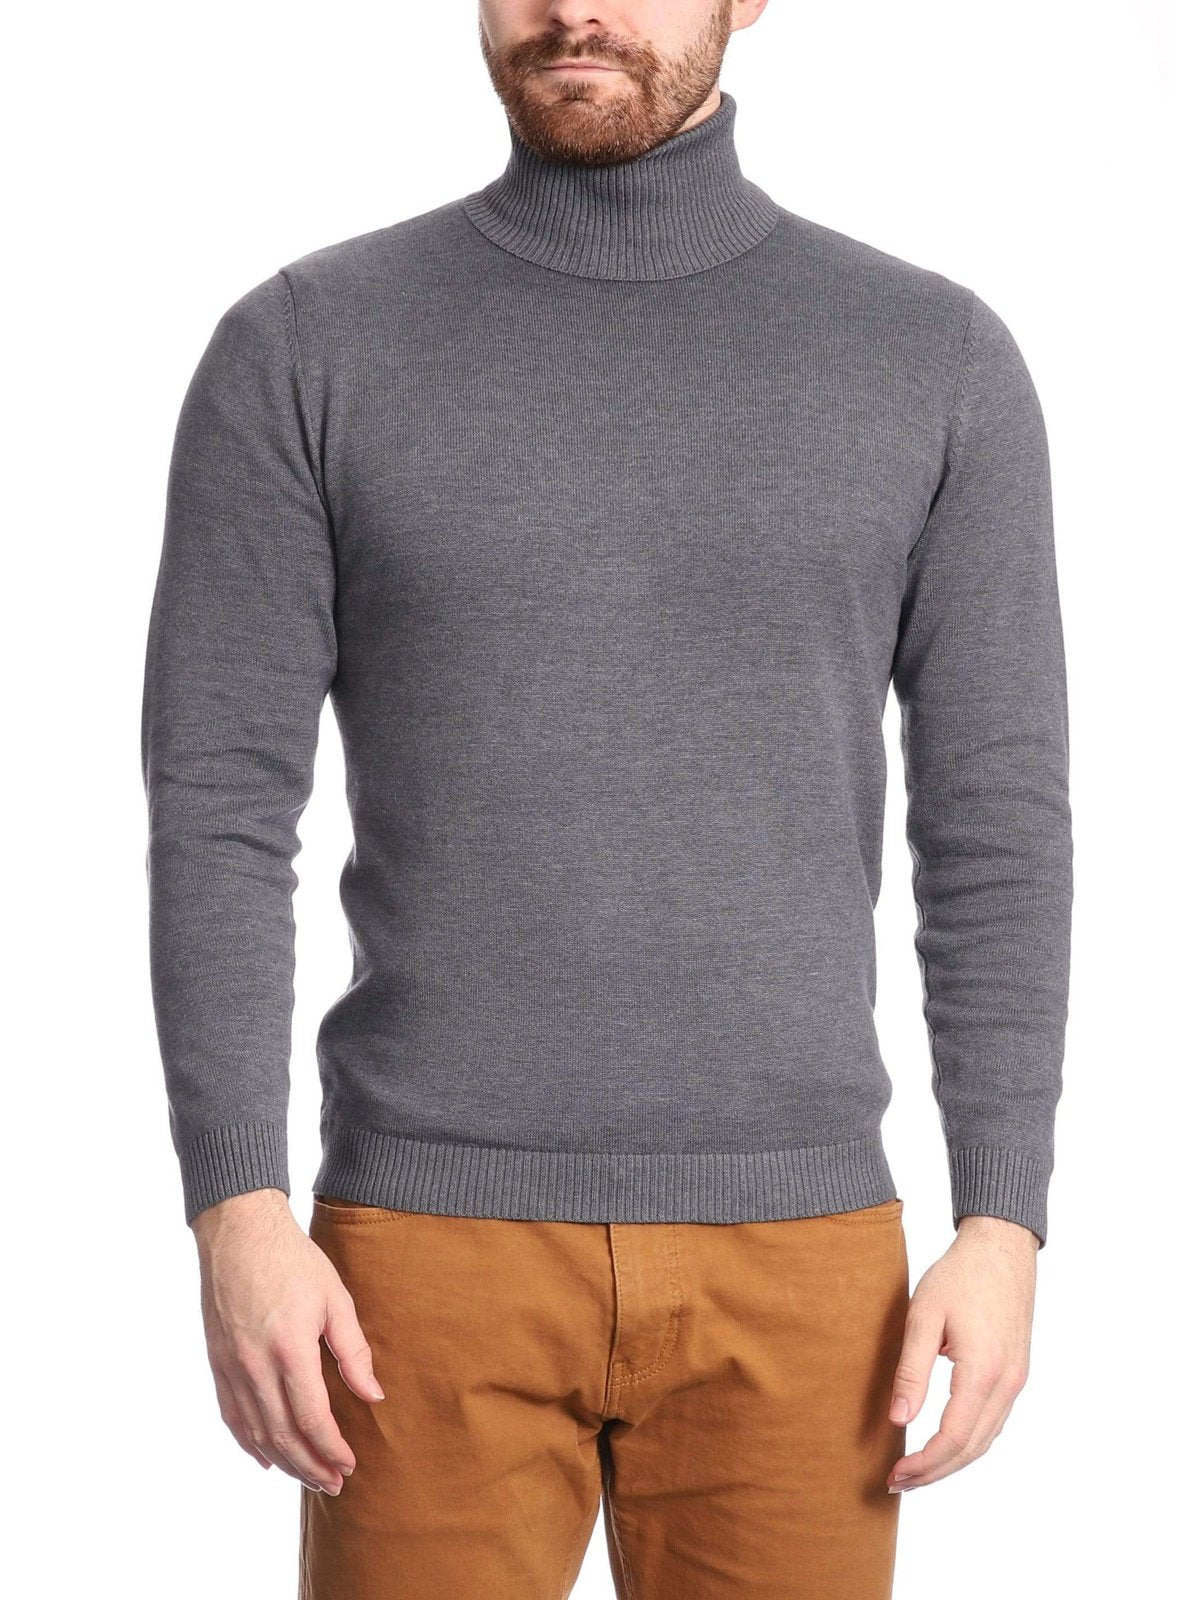 Arthur Black Default Category Migrated Gray / L Arthur Black Men&#39;s Solid Gray Pullover Cotton Blend Turtleneck Sweater Shirt